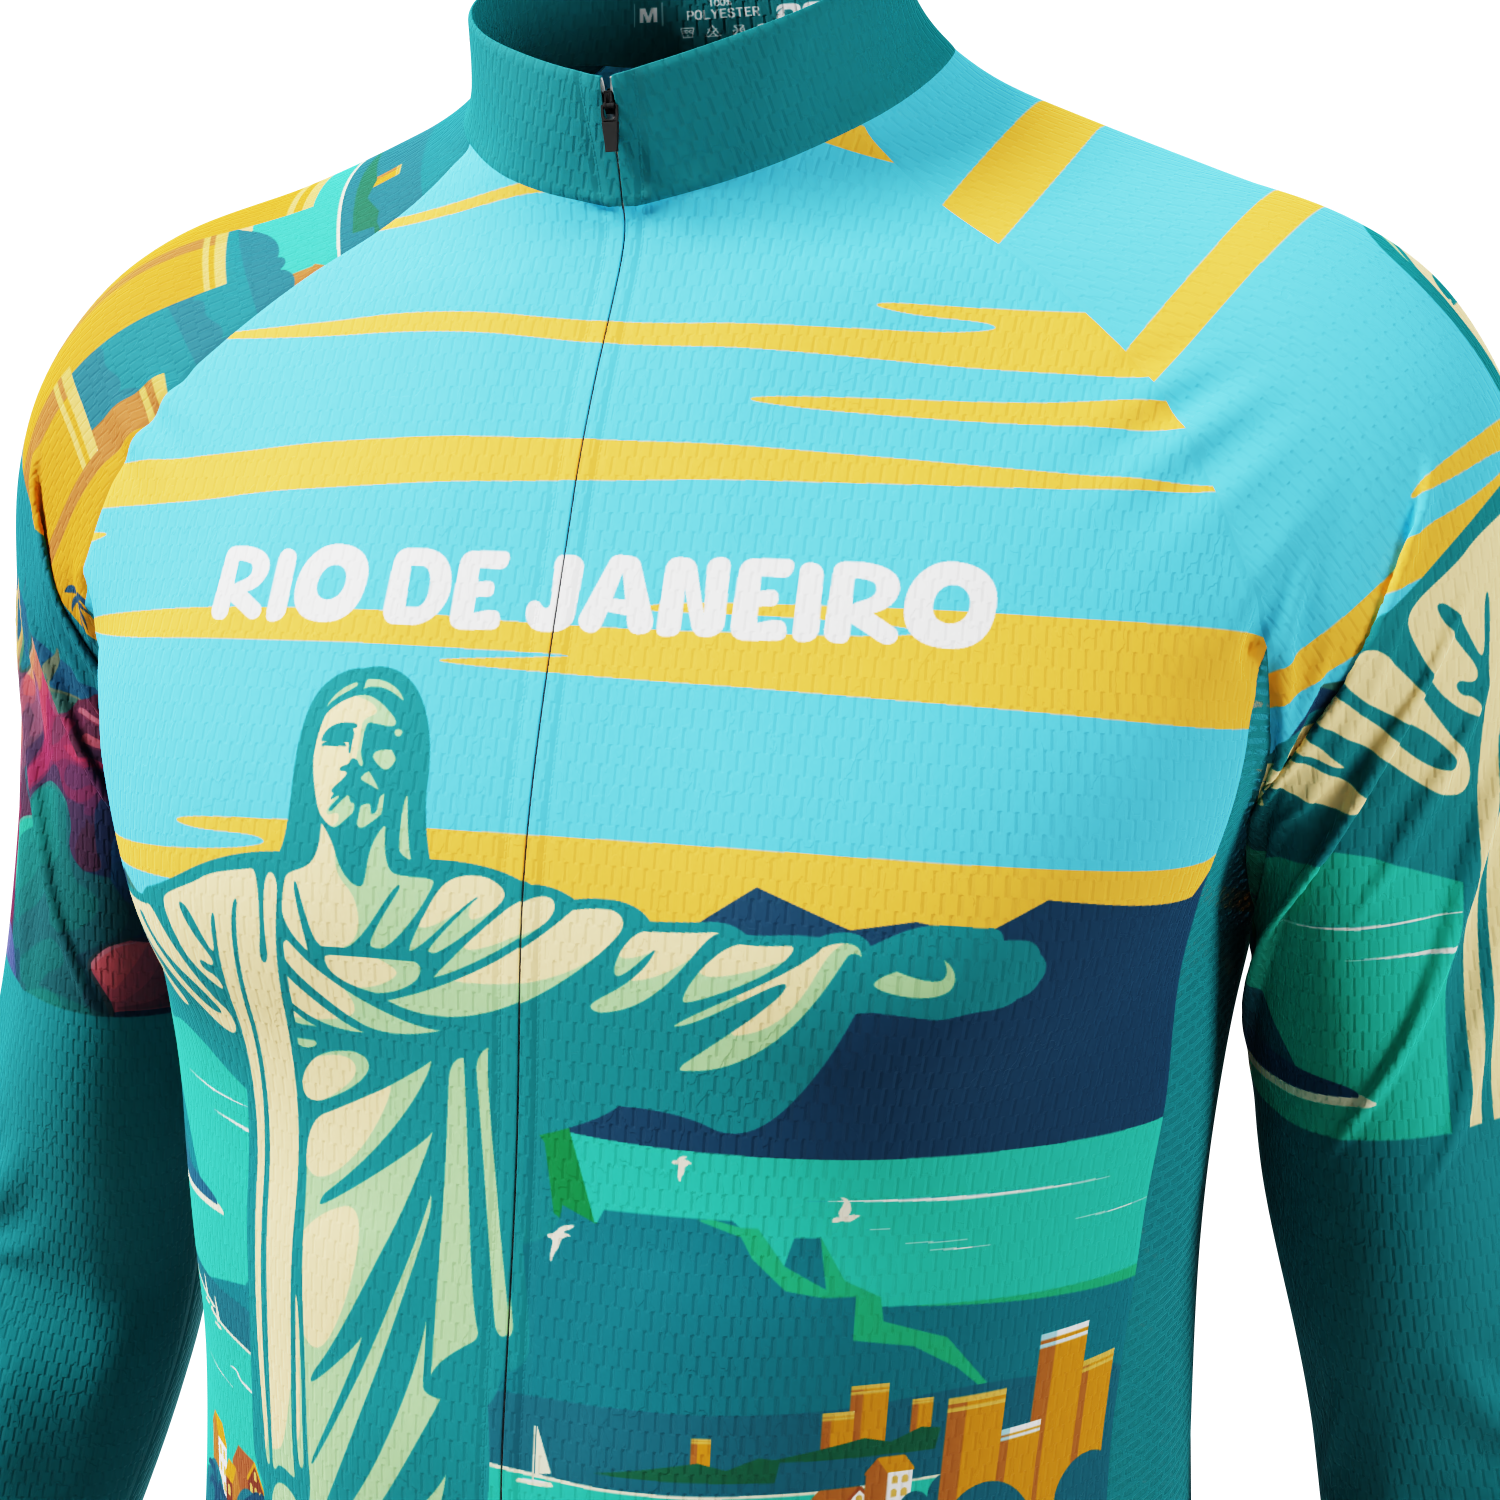 Men's Around The World - Rio de Janeiro Long Sleeve Cycling Jersey